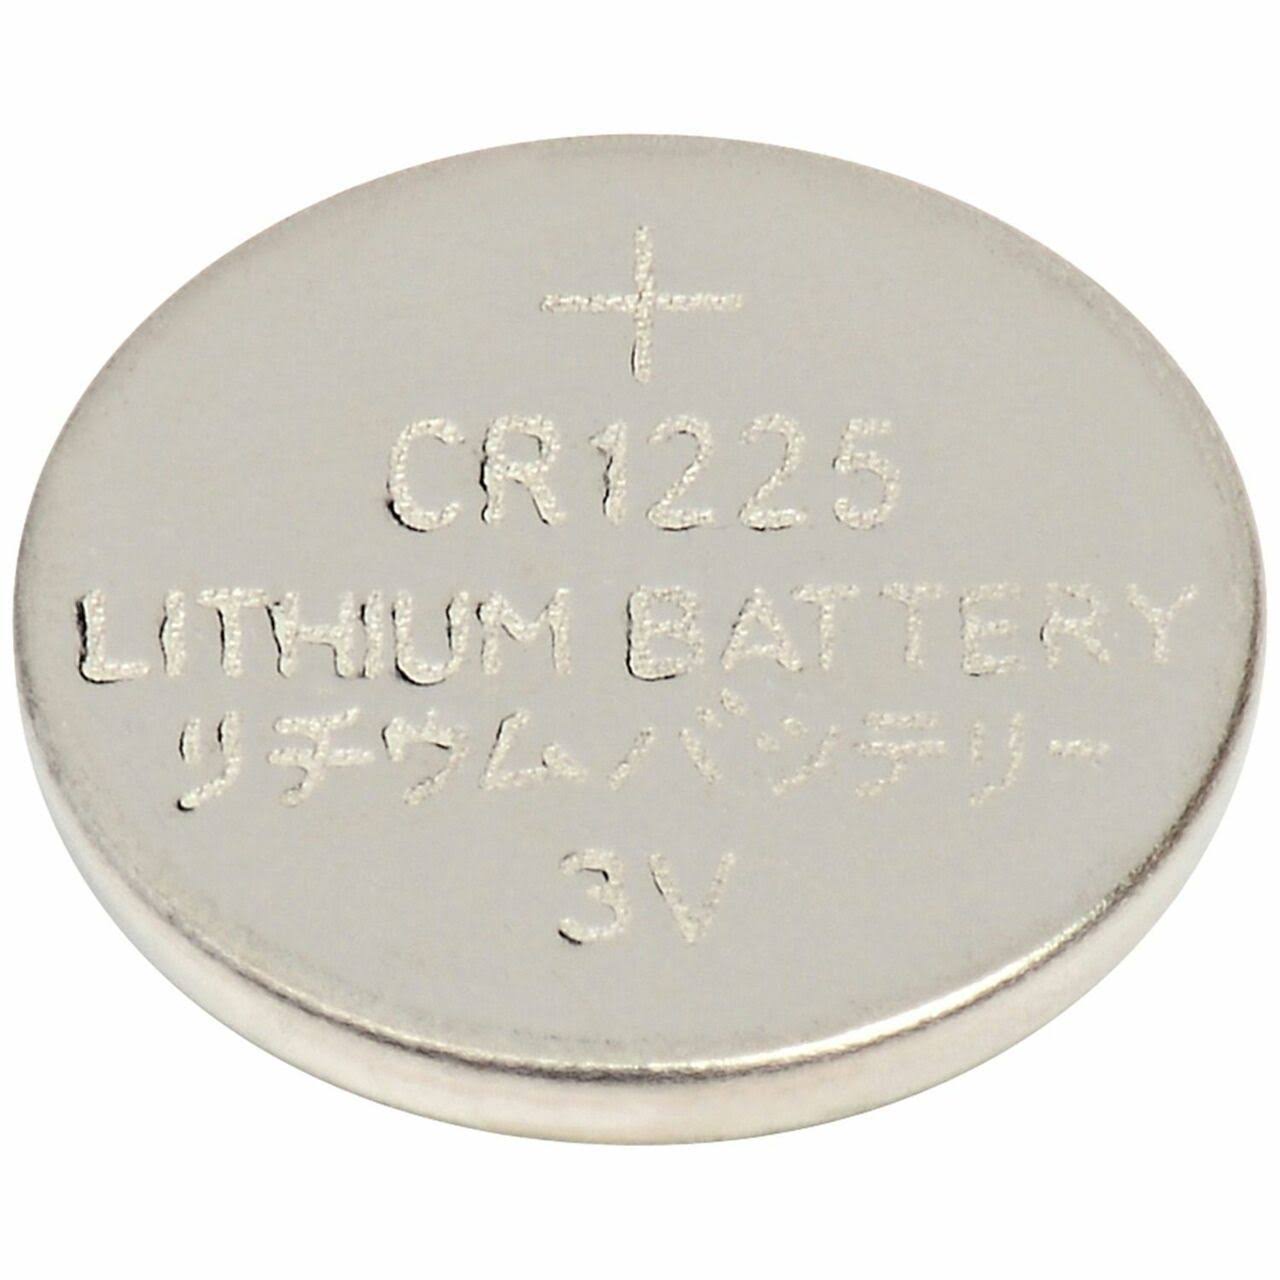 Cr1225 Lithium Coin Cell Battery - UltraLast UL1225